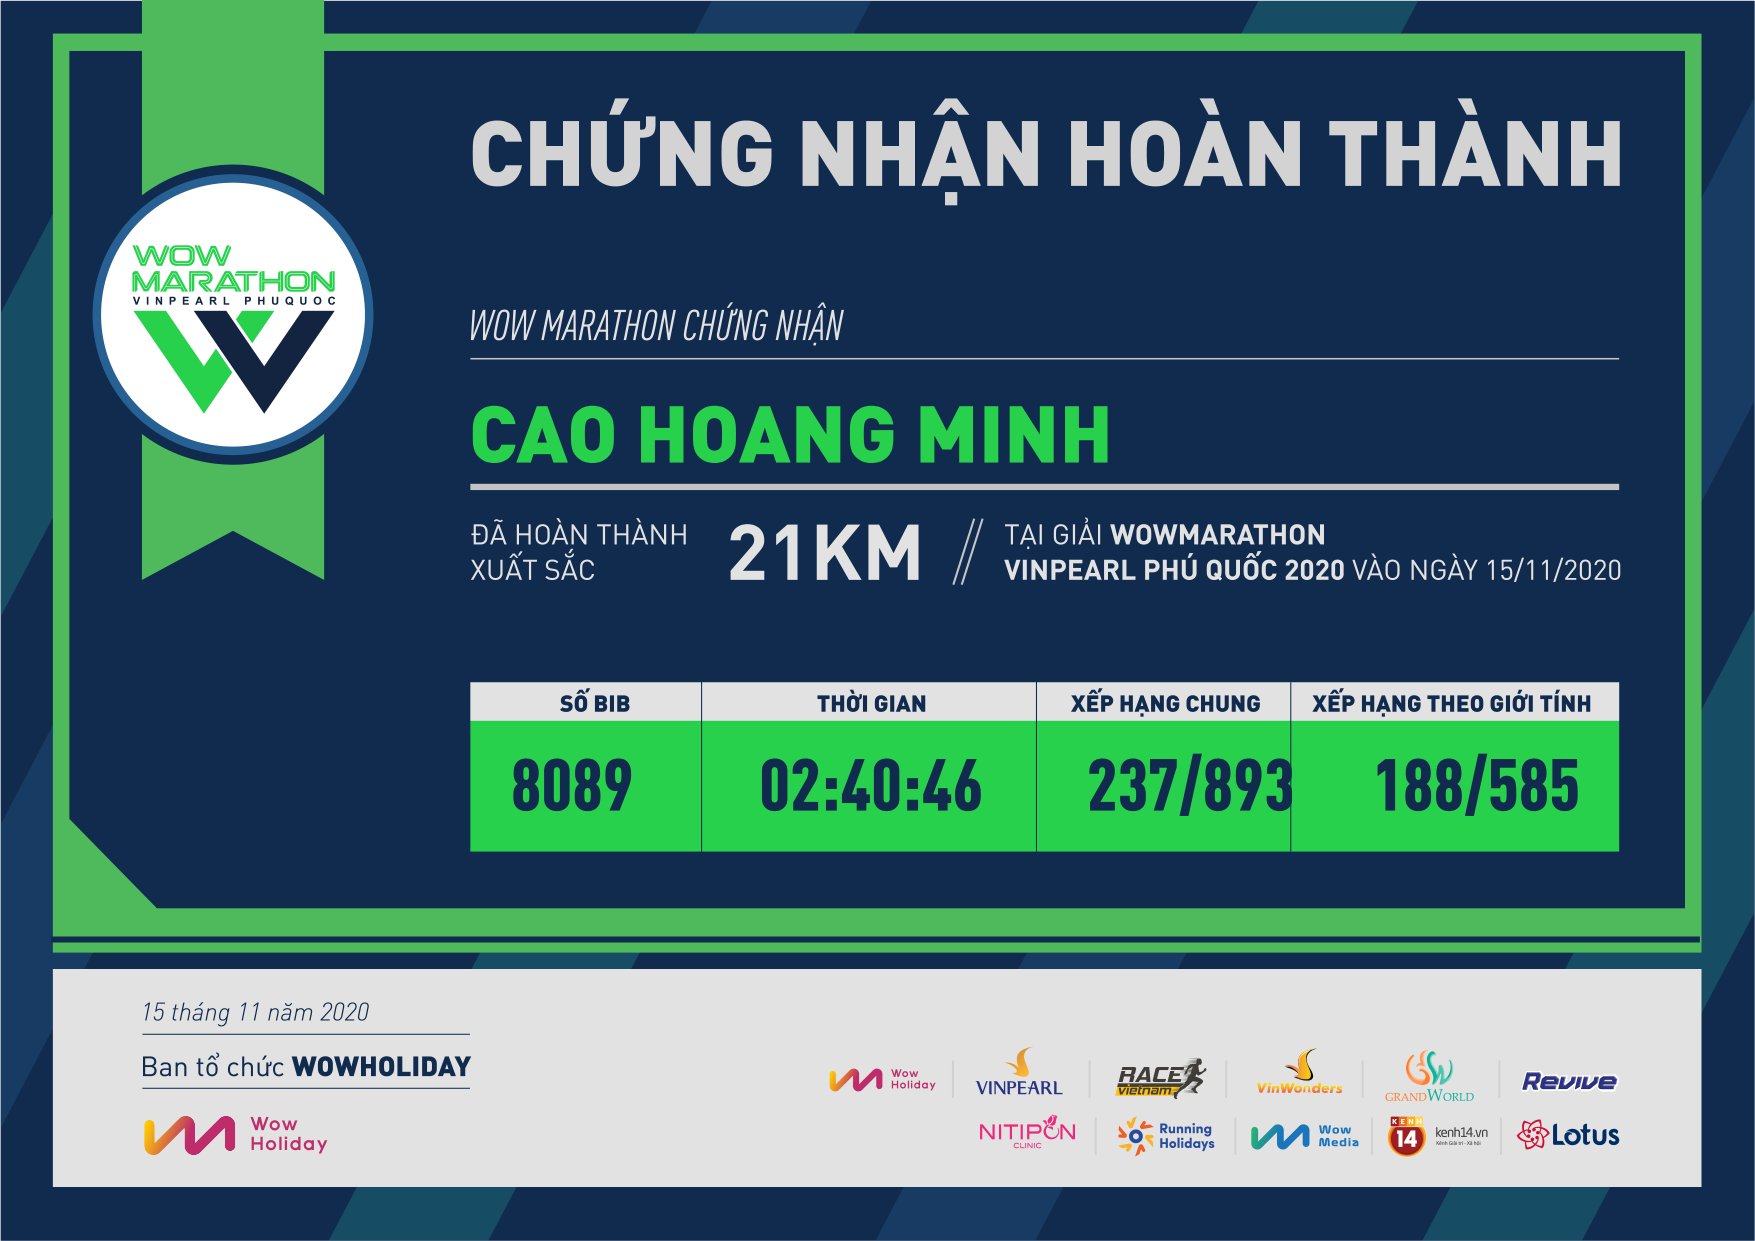 8089 - Cao Hoang Minh